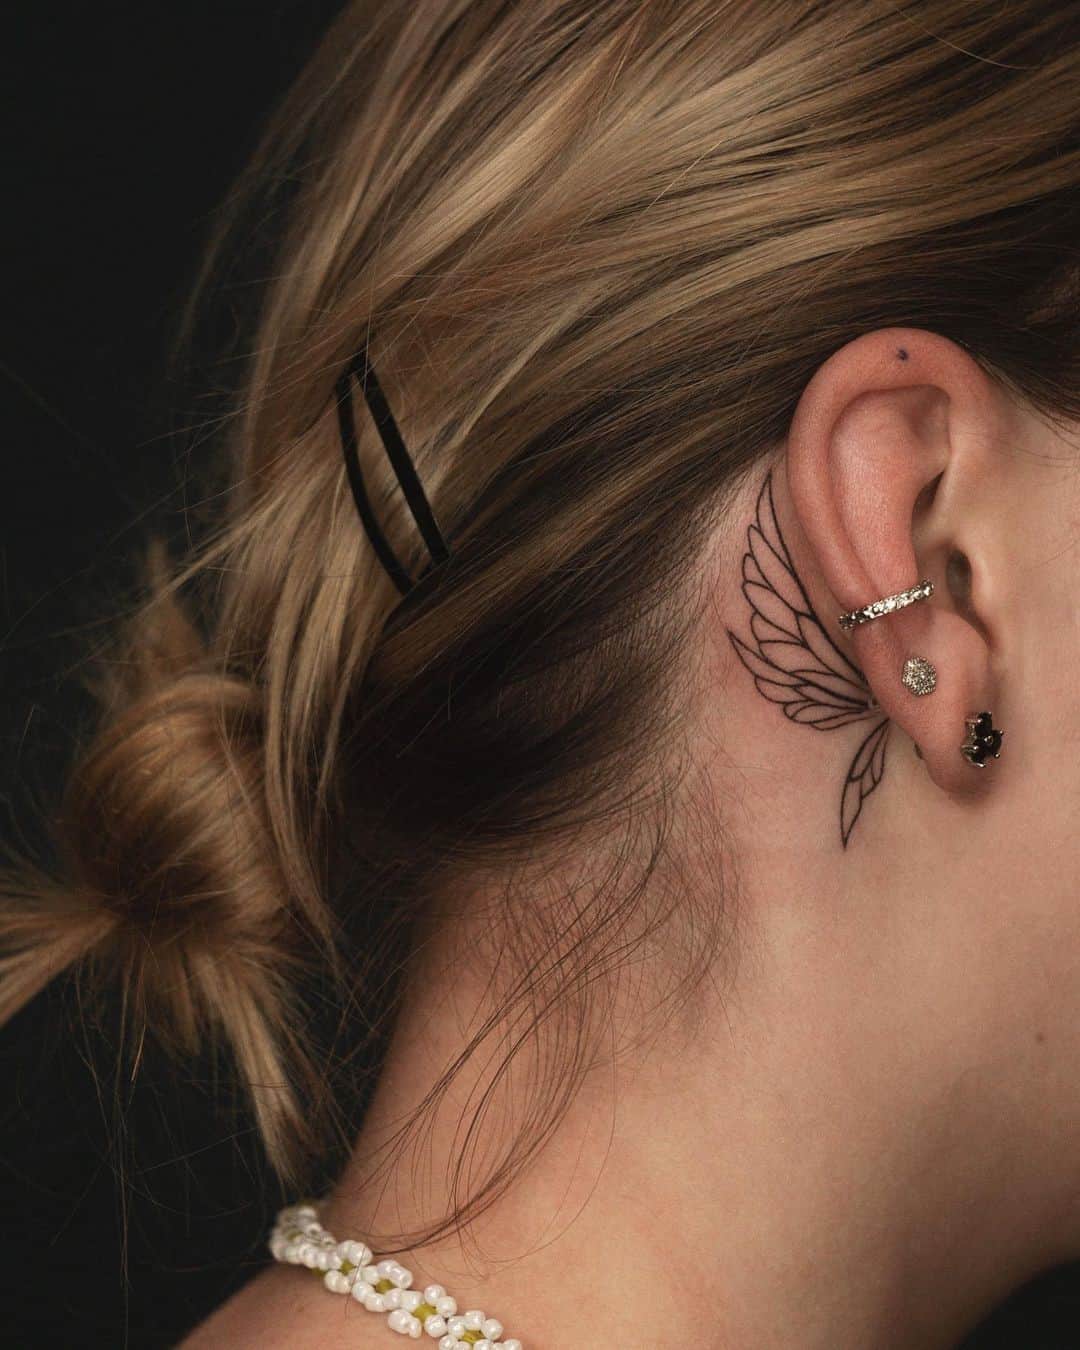 Fairy Wings Tattoo Behind Ear